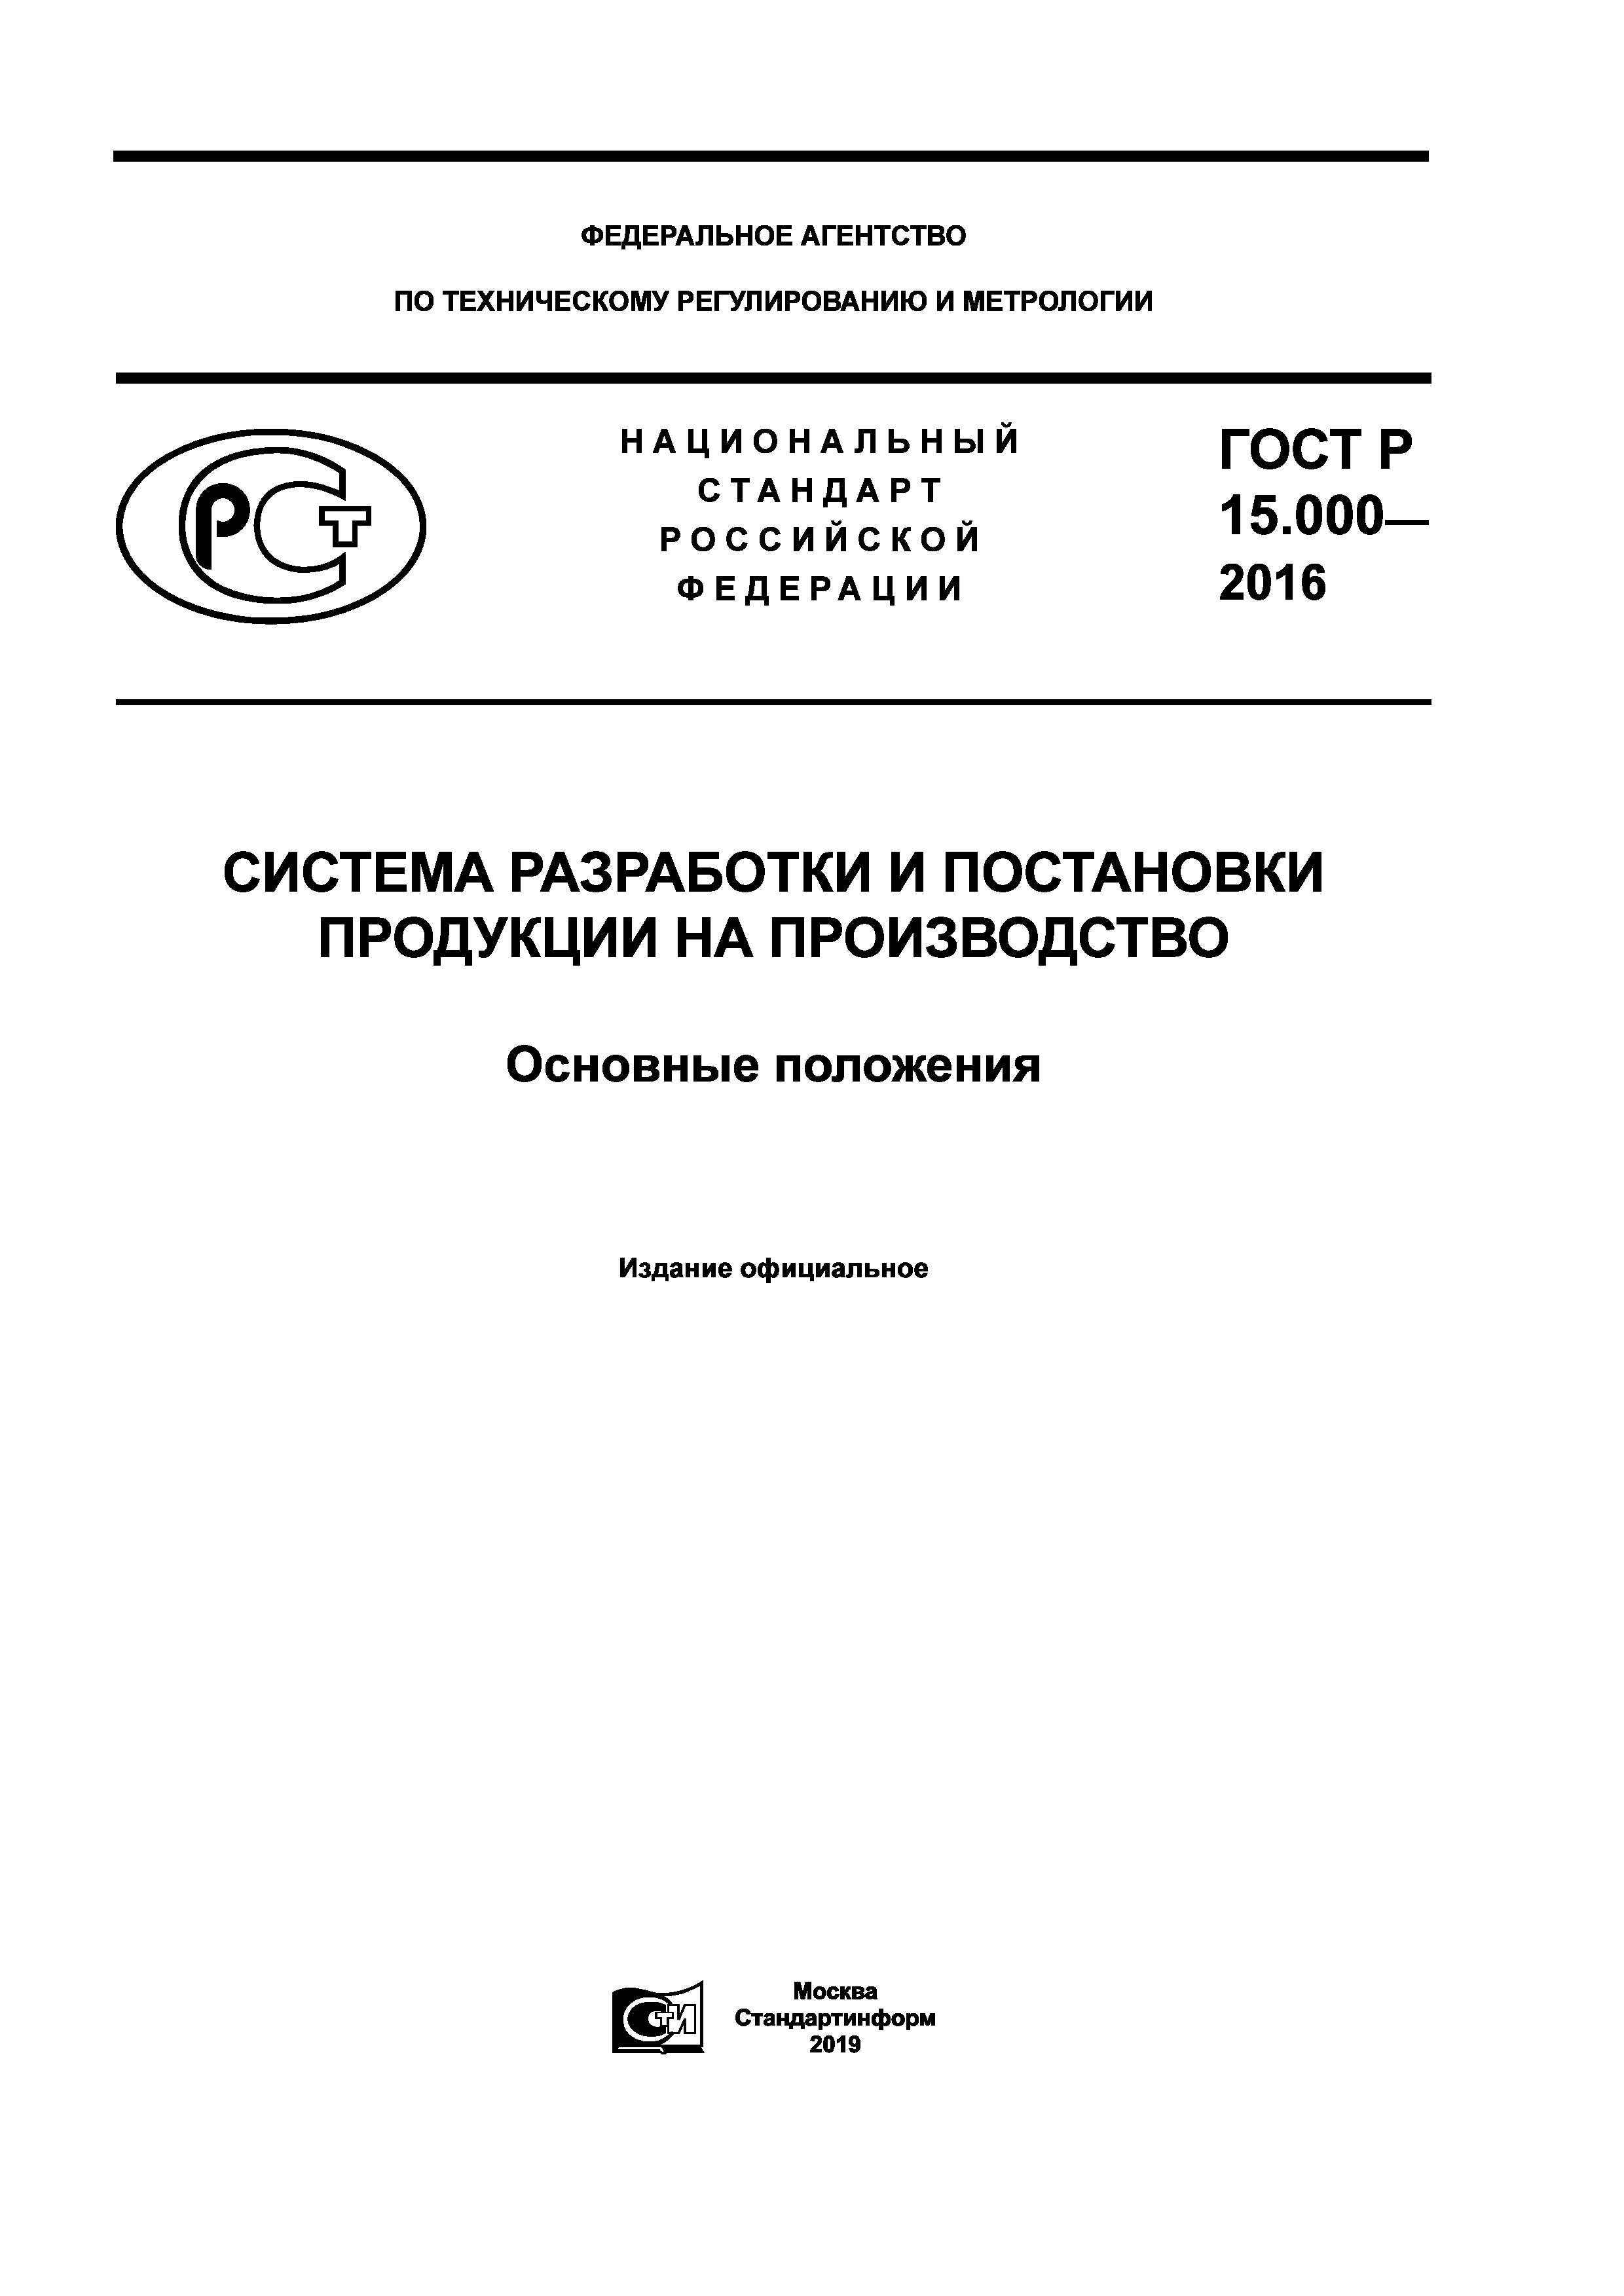 ГОСТ Р 15.000-2016